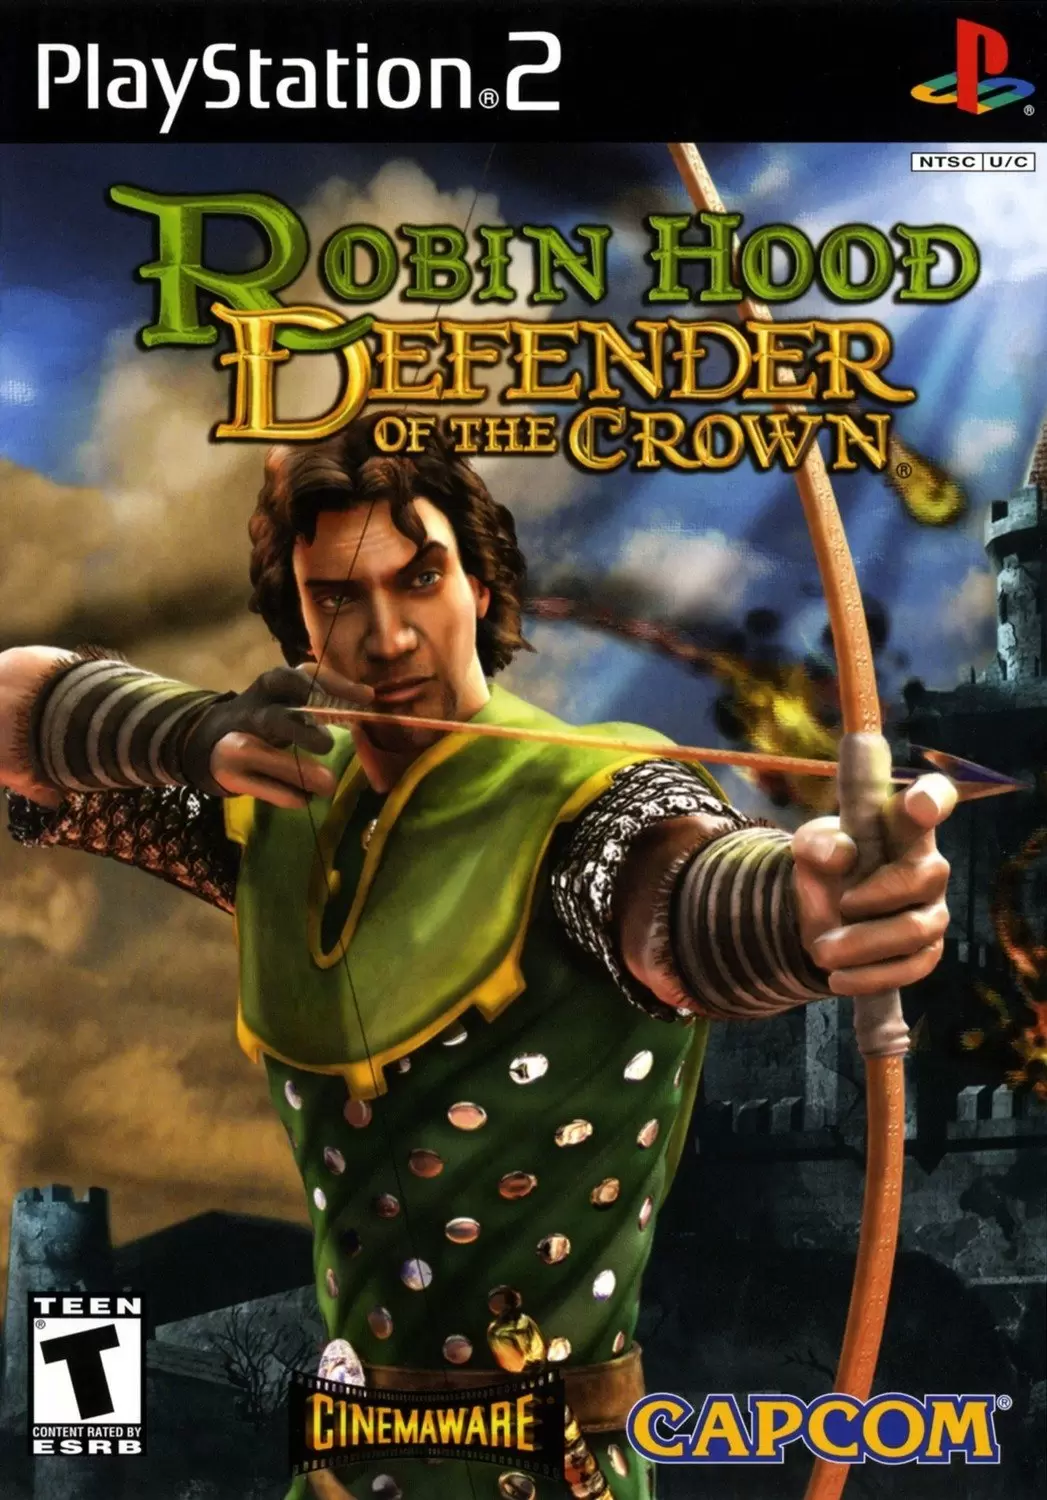 PS2 Games - Robin Hood: Defender of the Crown